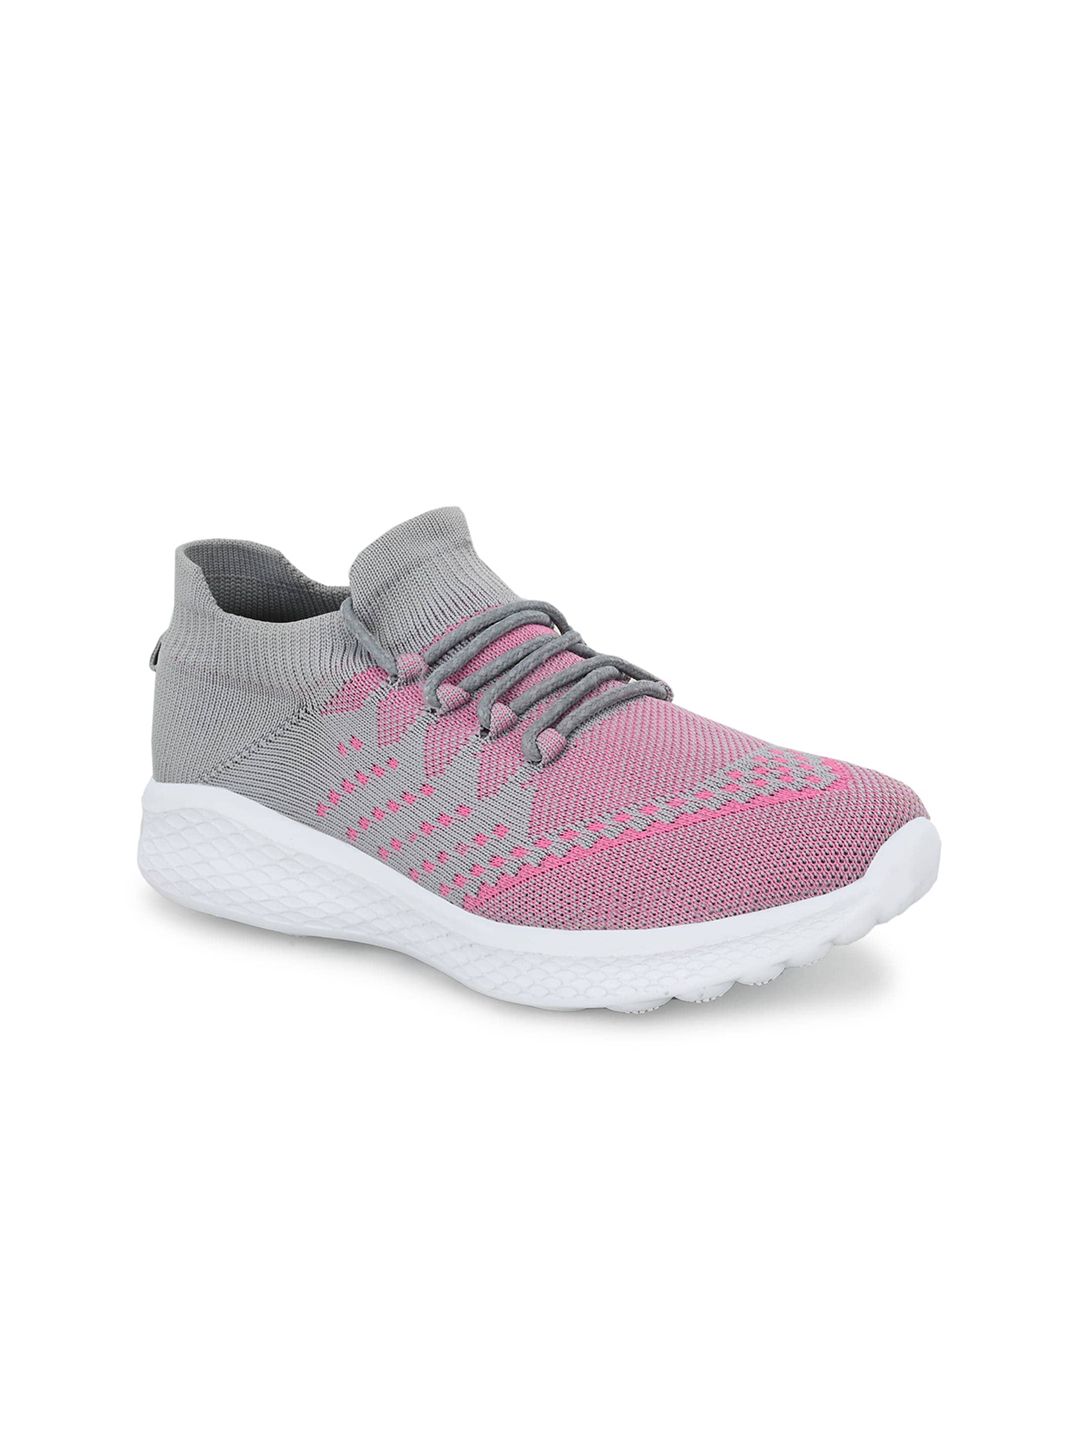 Mast & Harbour Women Pink Printed Slip-On Sneakers Price in India